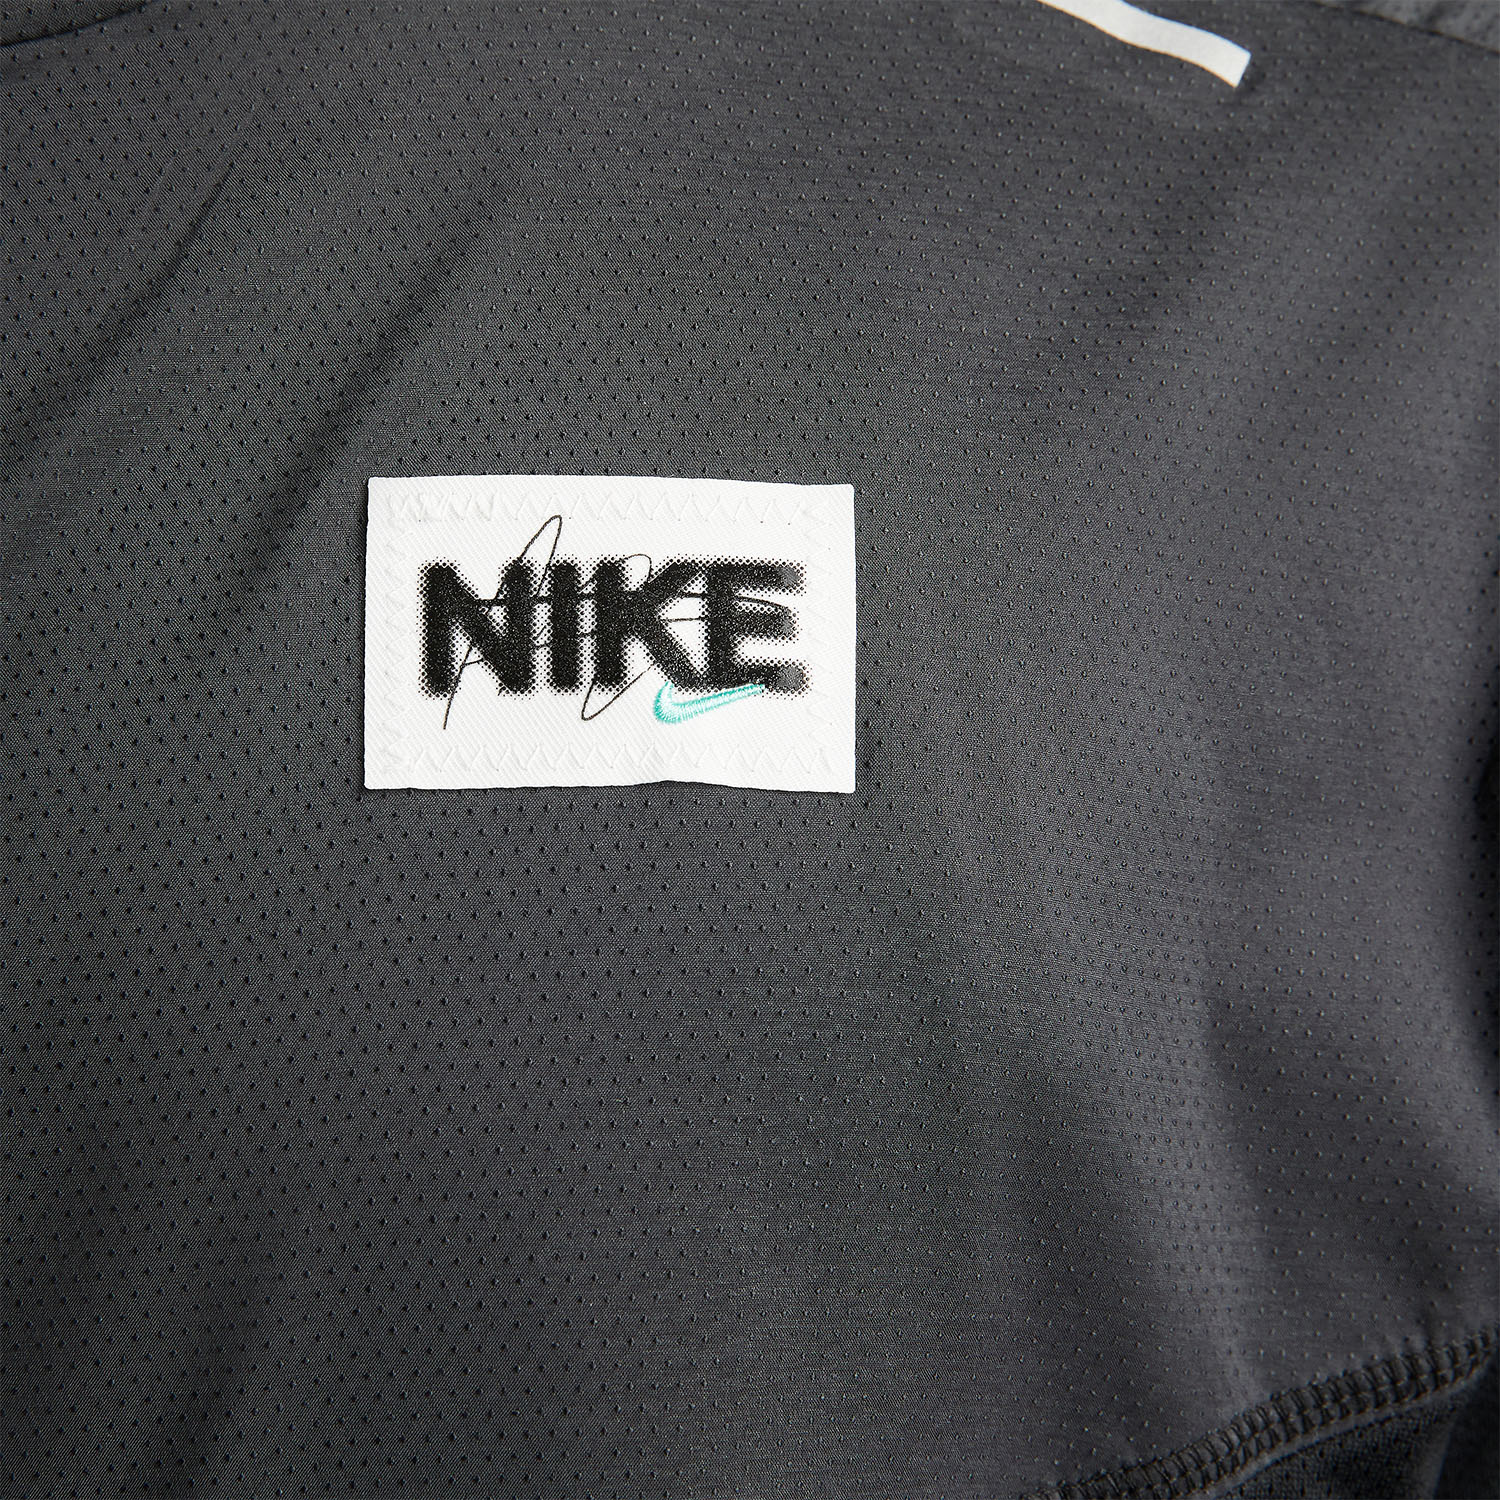 Nike Windrunner Logo Jacket - Black/Iron Grey/Light Menta